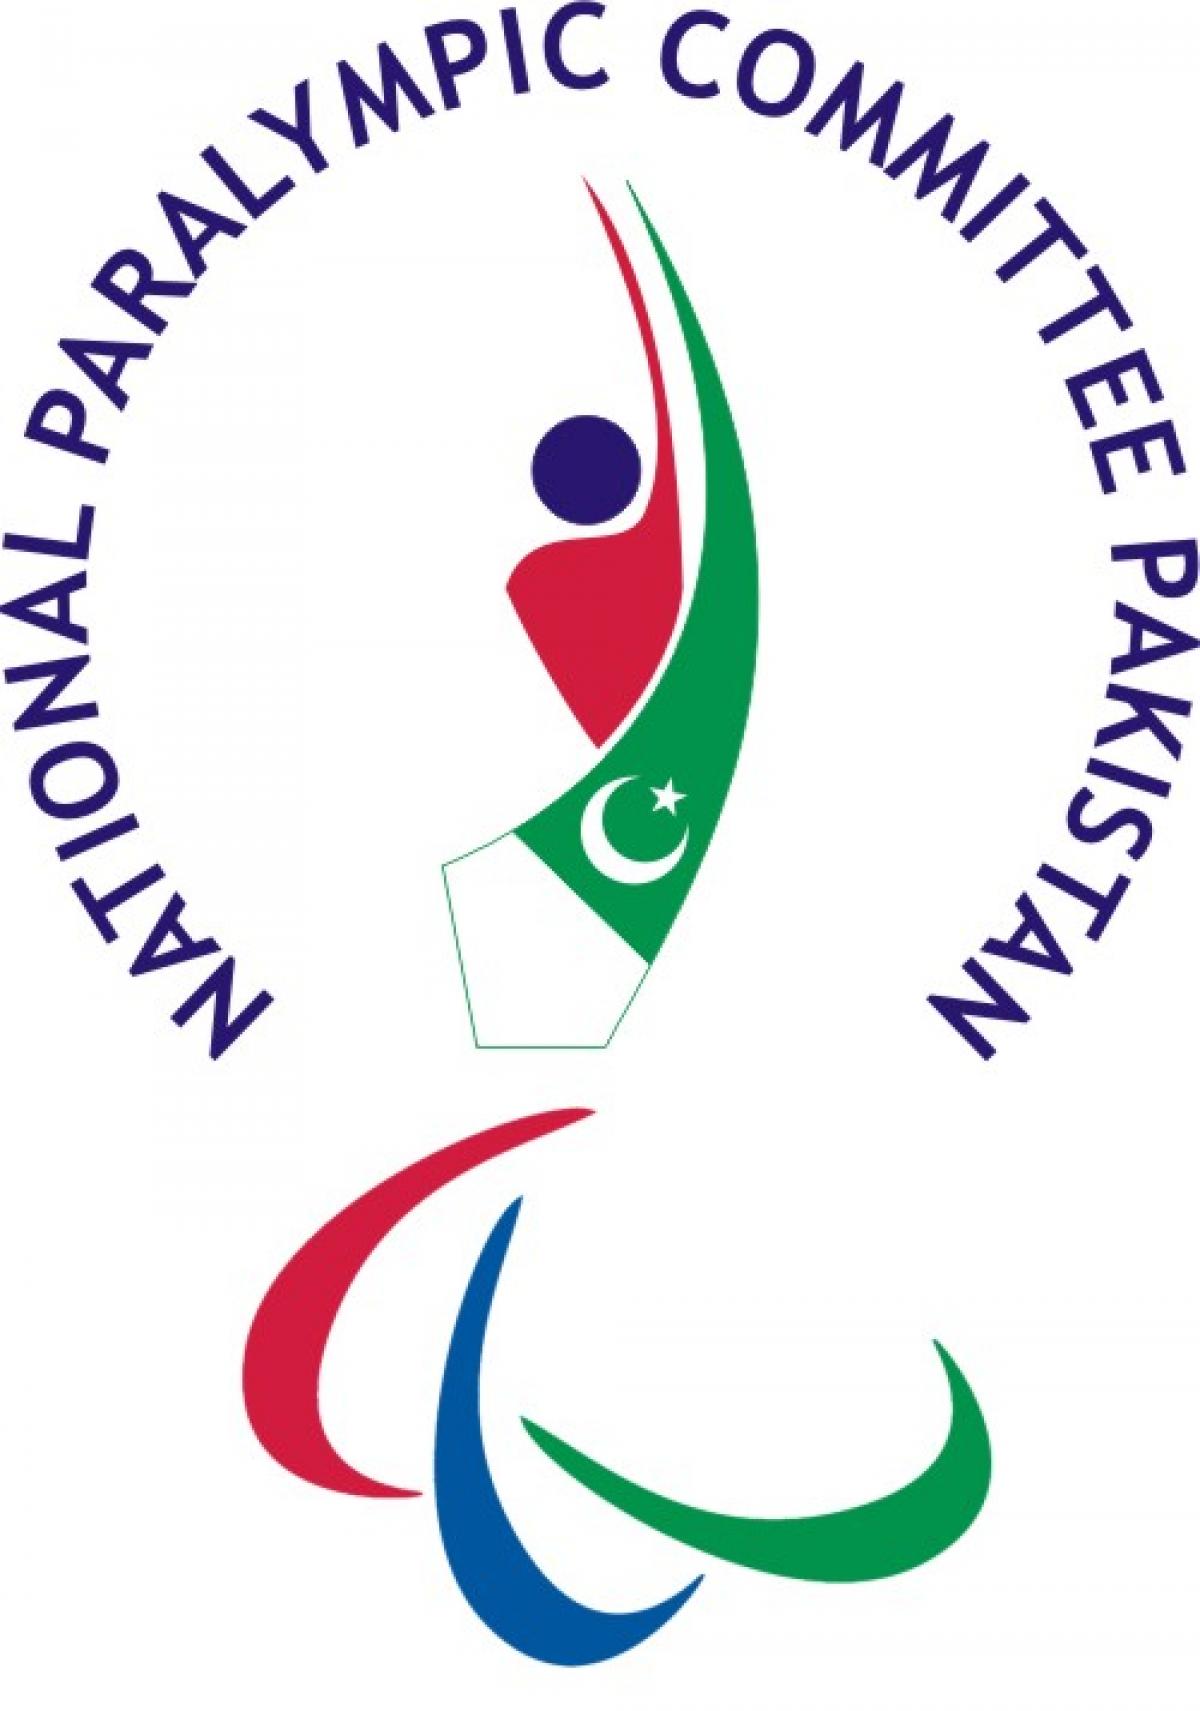 NPC Pakistan logo.